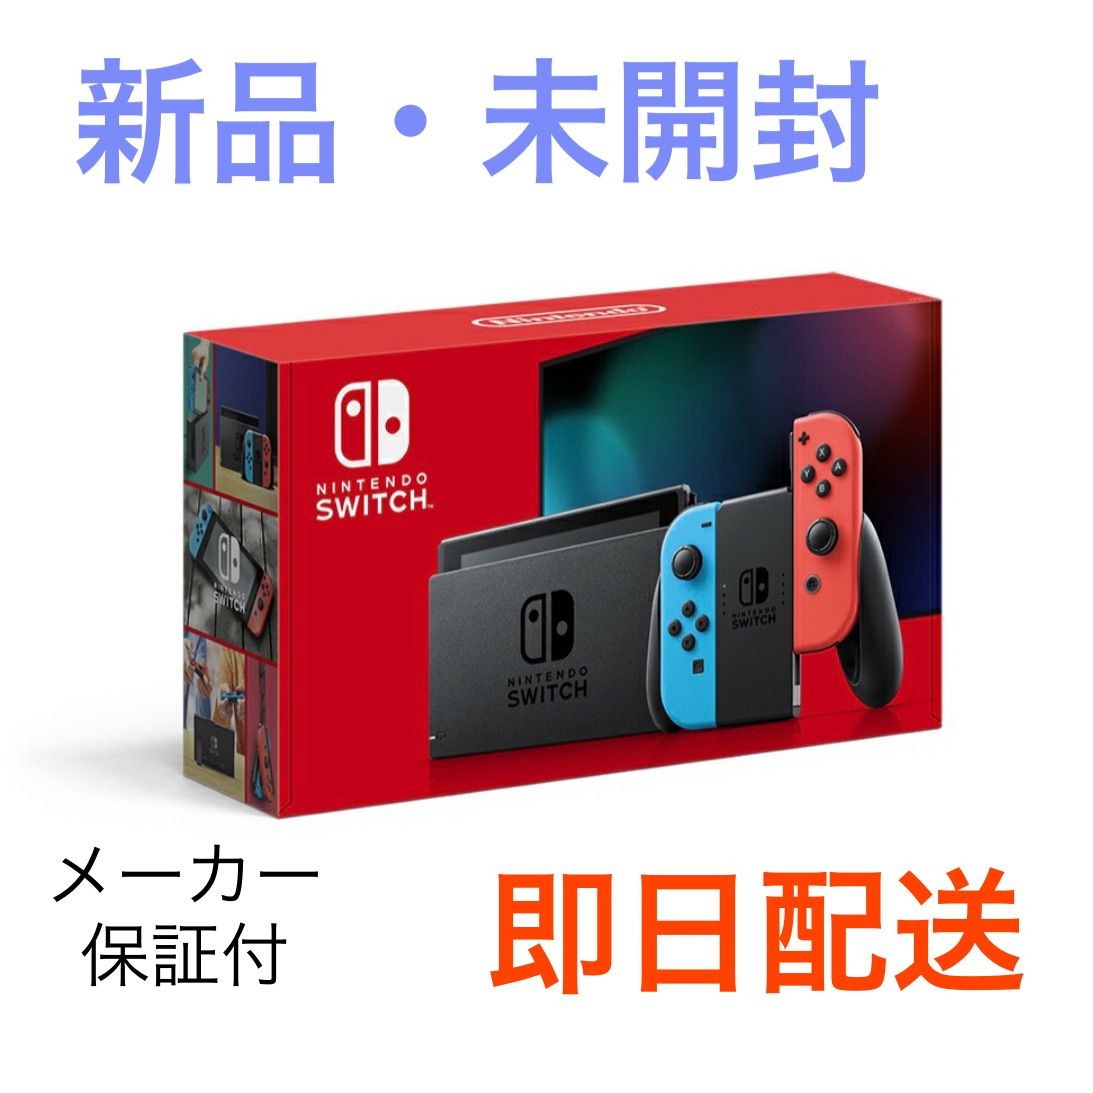 Nintendo Switch JOY-CON ネオンブルー ネオンレッド - テレビゲーム